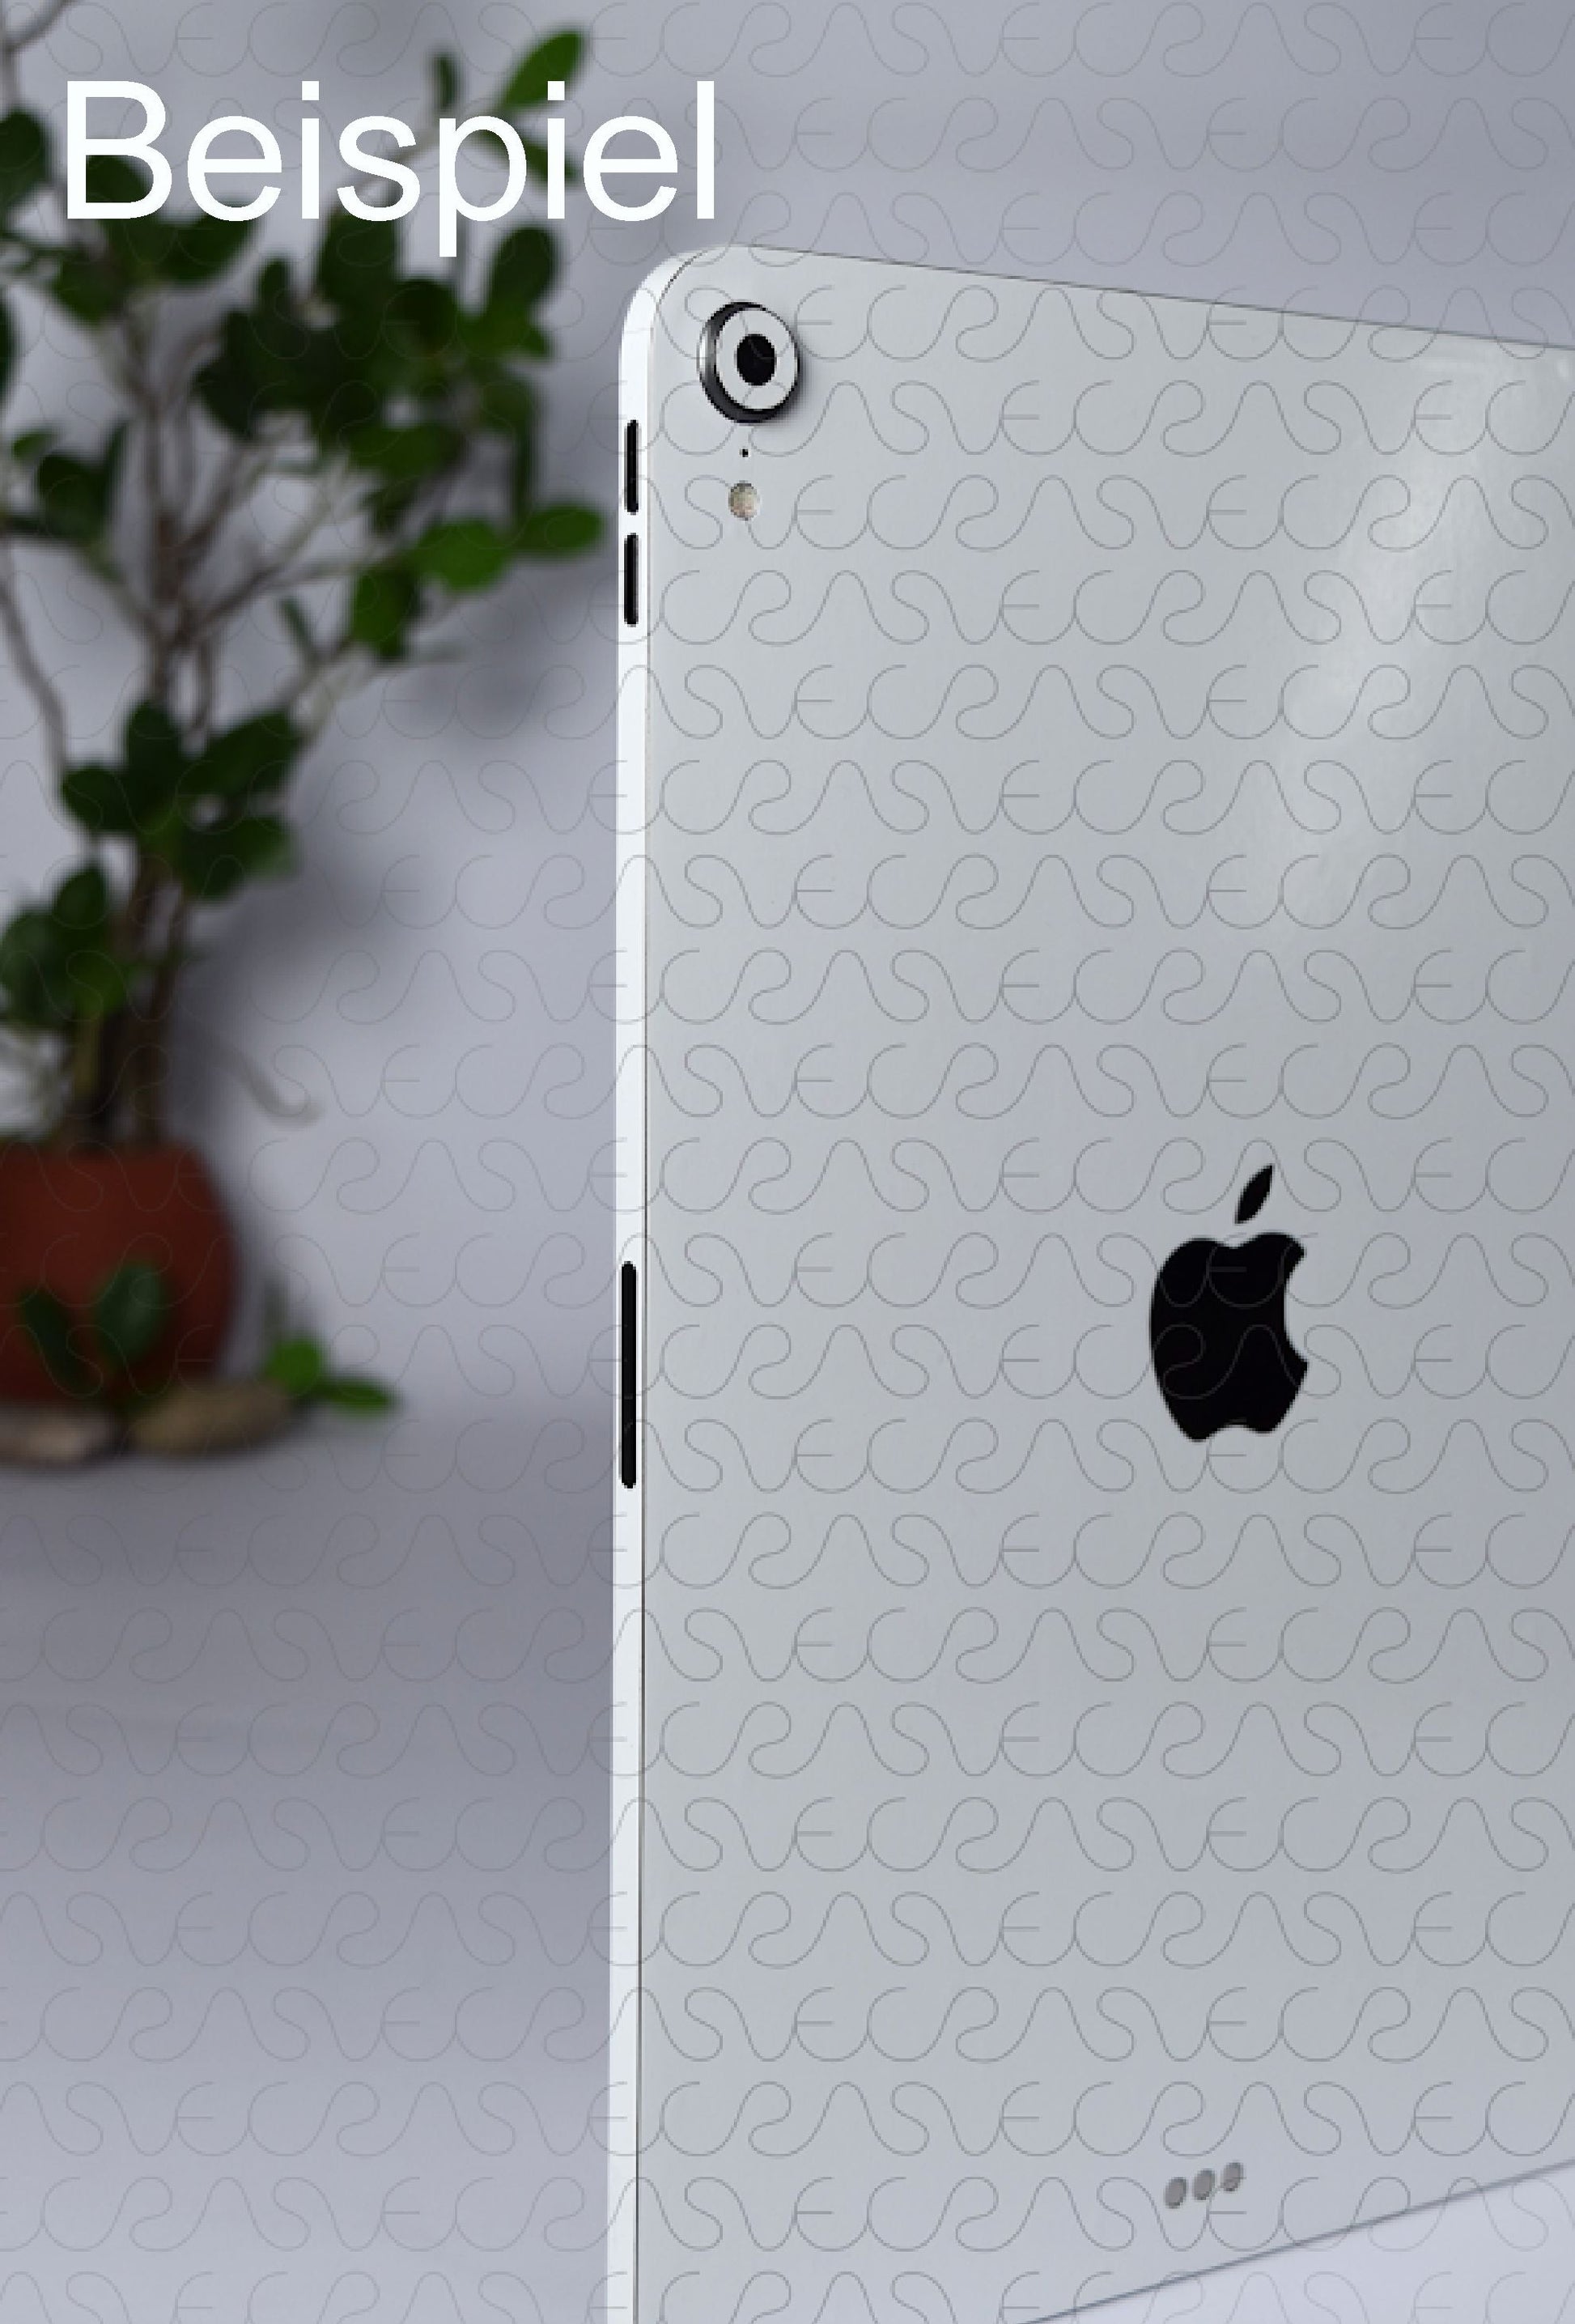 iPad Pro Skin 12,9 3.Generation Design Cover Folie Vinyl Skins & Wraps Aufkleber Skins4u   